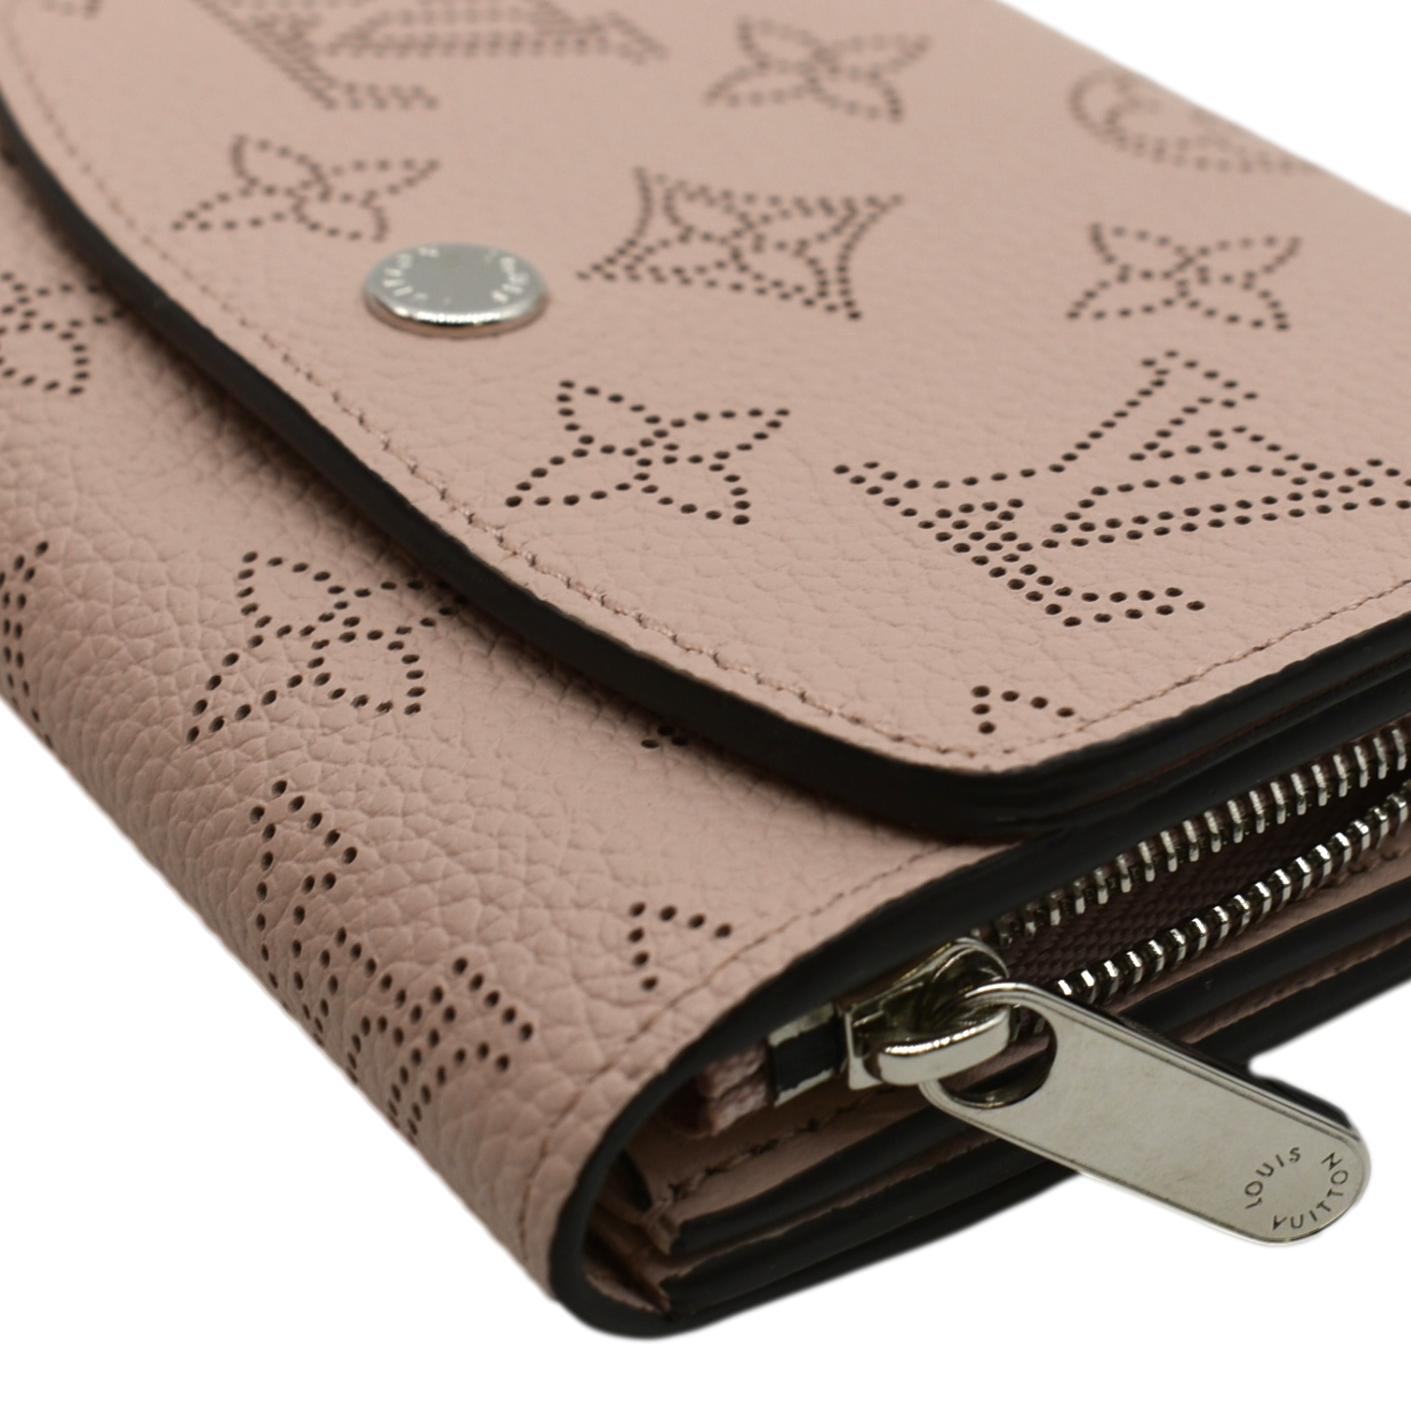 Louis Vuitton M62541 Iris Compact Wallet , Pink, One Size